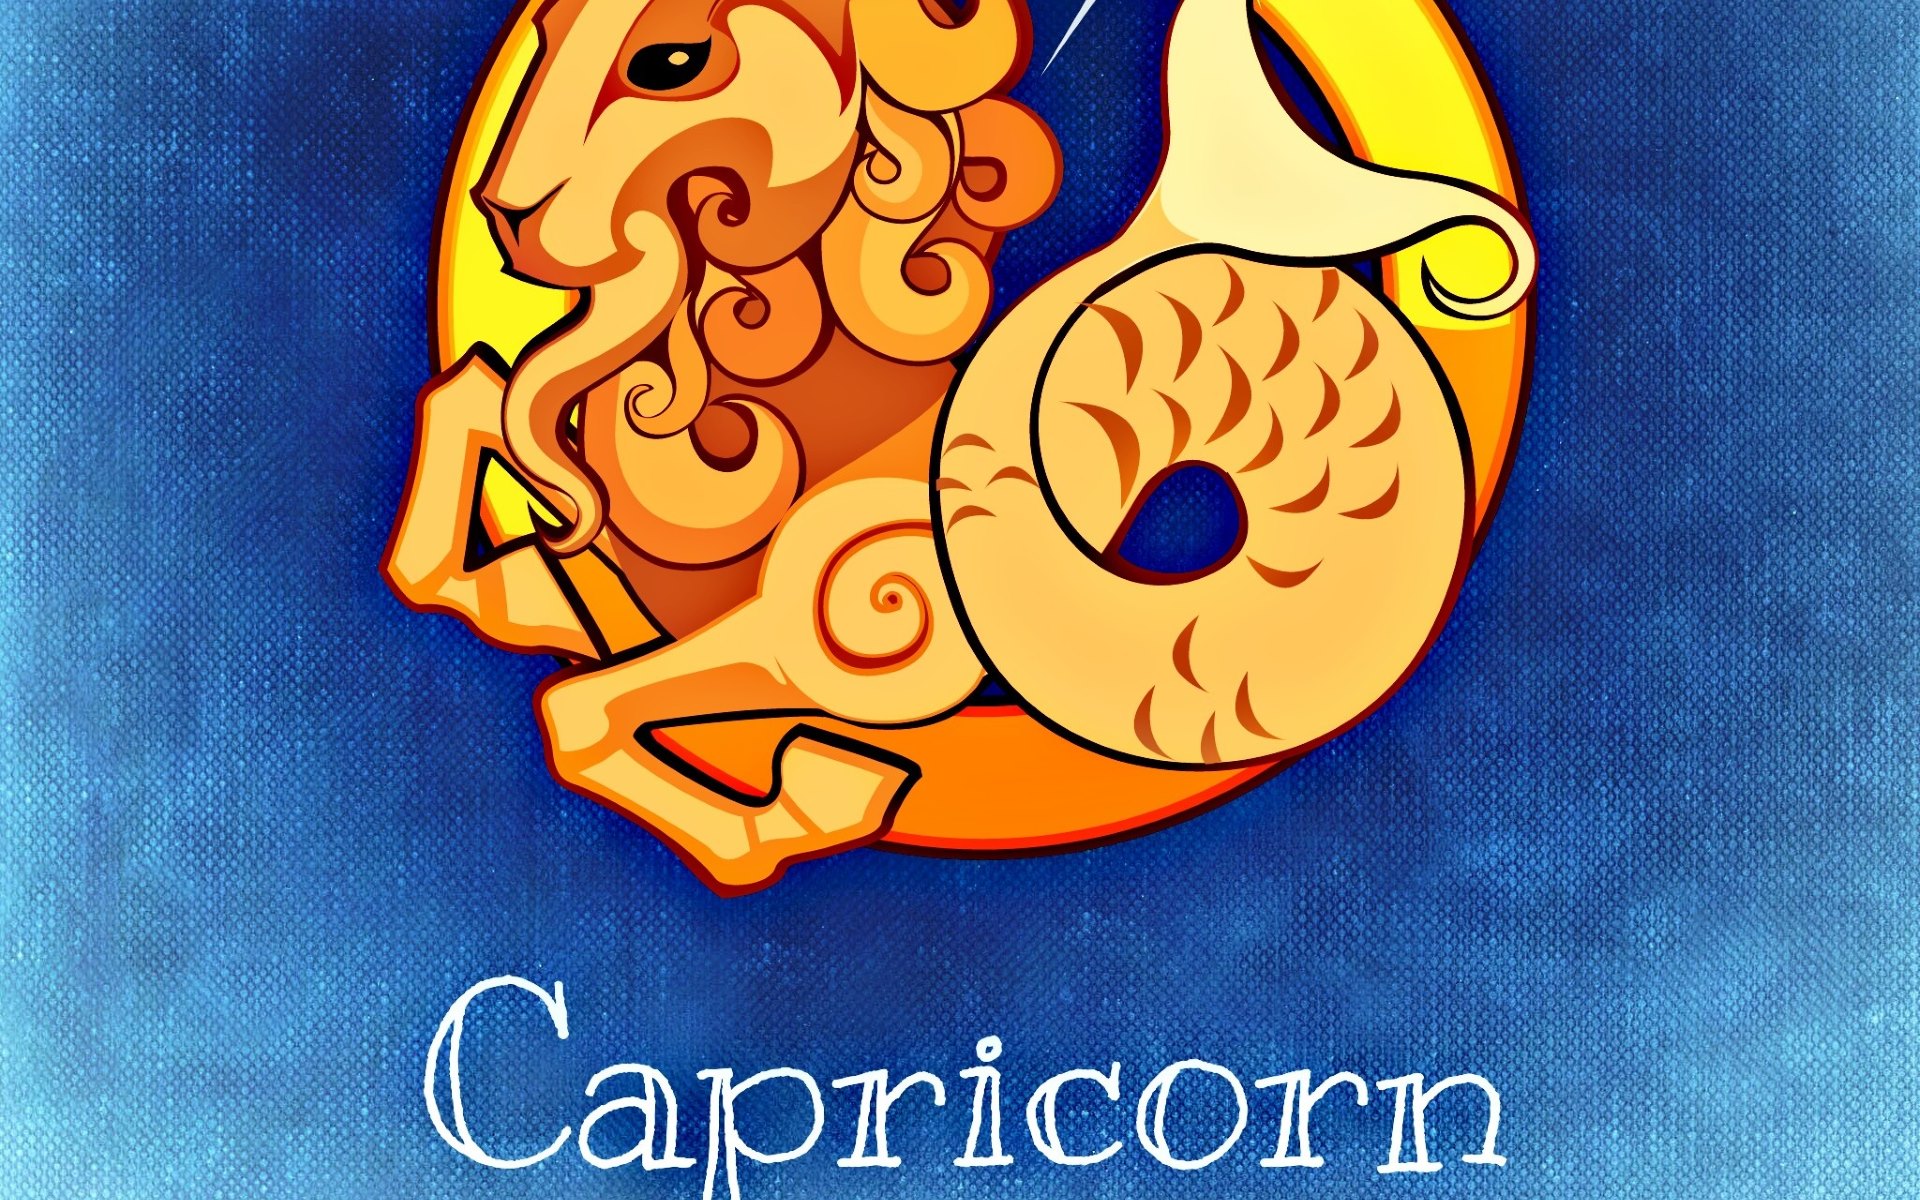 Horoscope - Capricorn by Alexas_Fotos